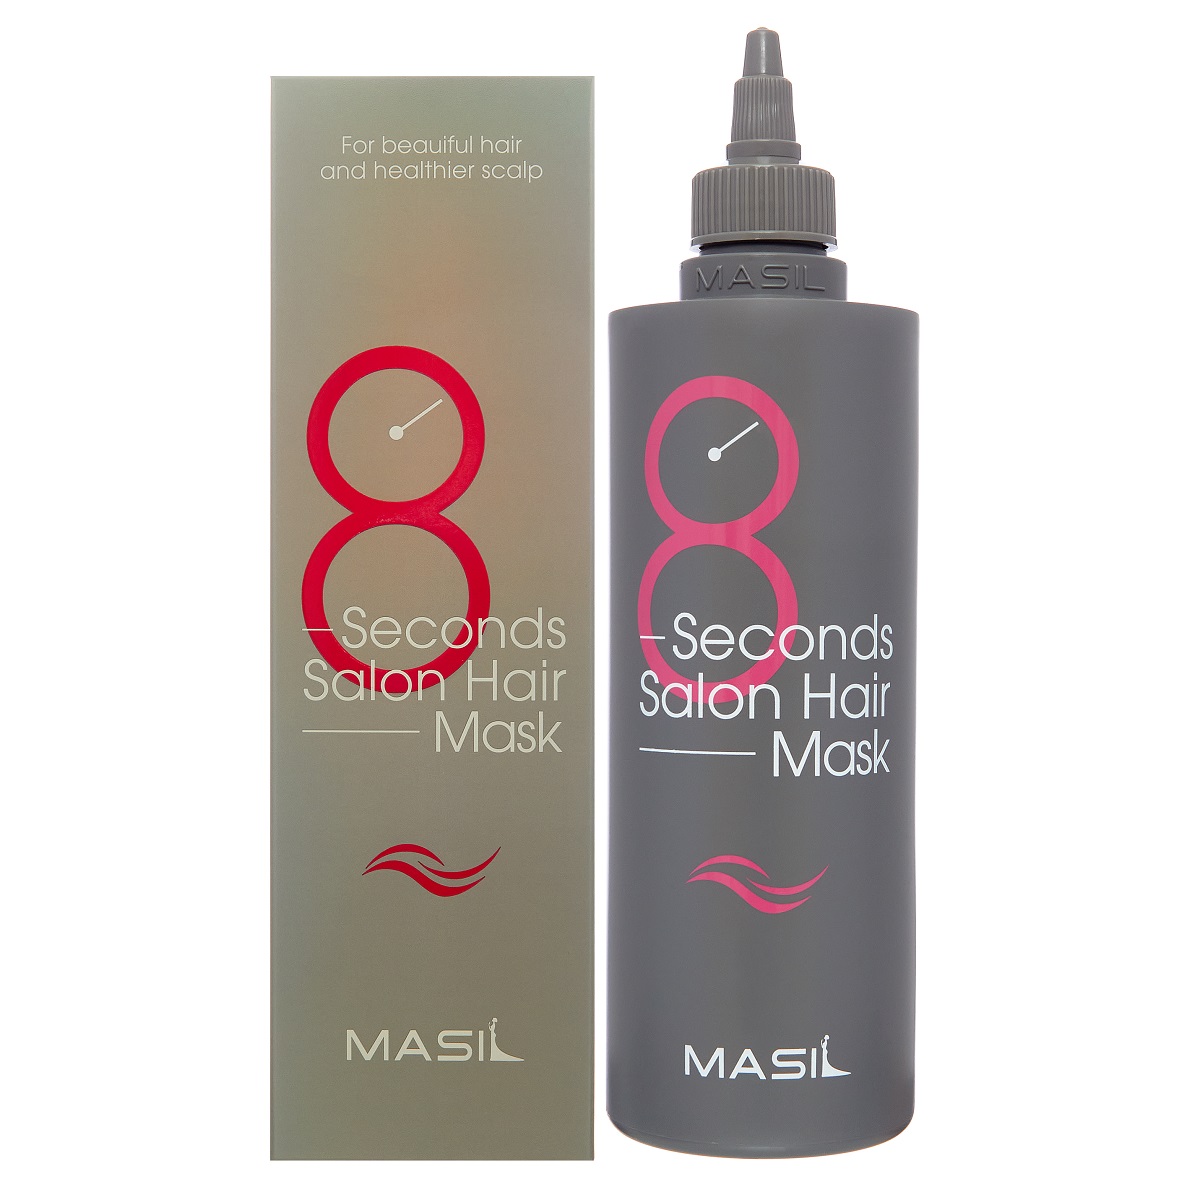 Masil Маска для быстрого восстановления волос 8 Seconds Salon Hair Mask, 350 мл (Masil, ) цена и фото